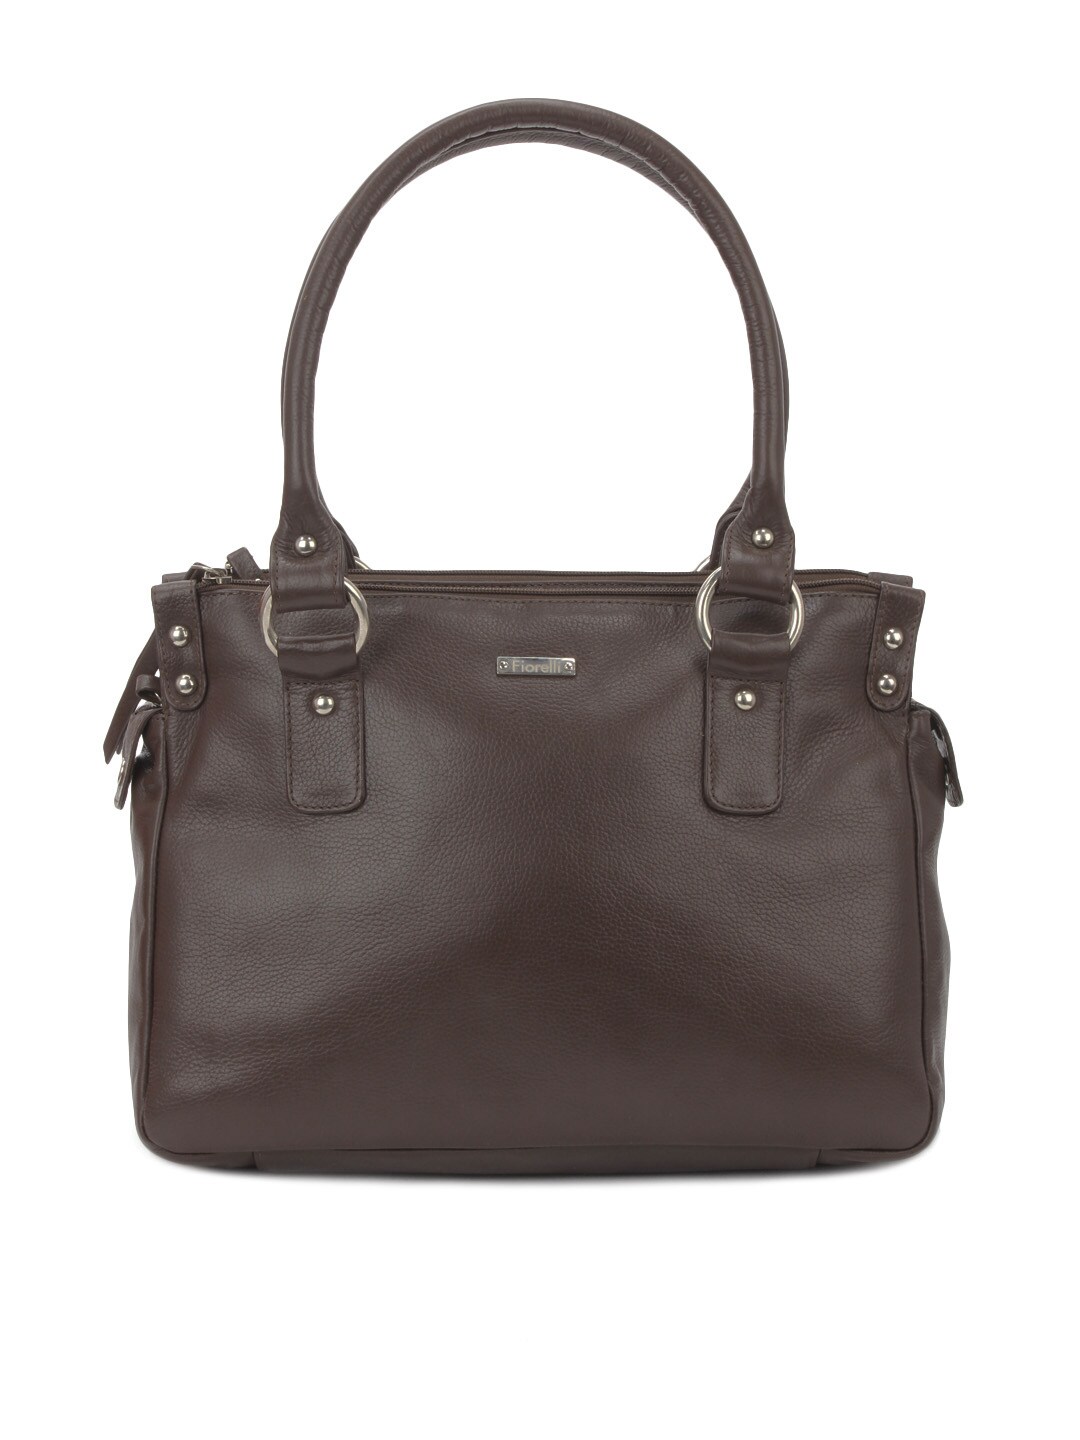 Fiorelli Women Chocolate Brown Leather Handbag